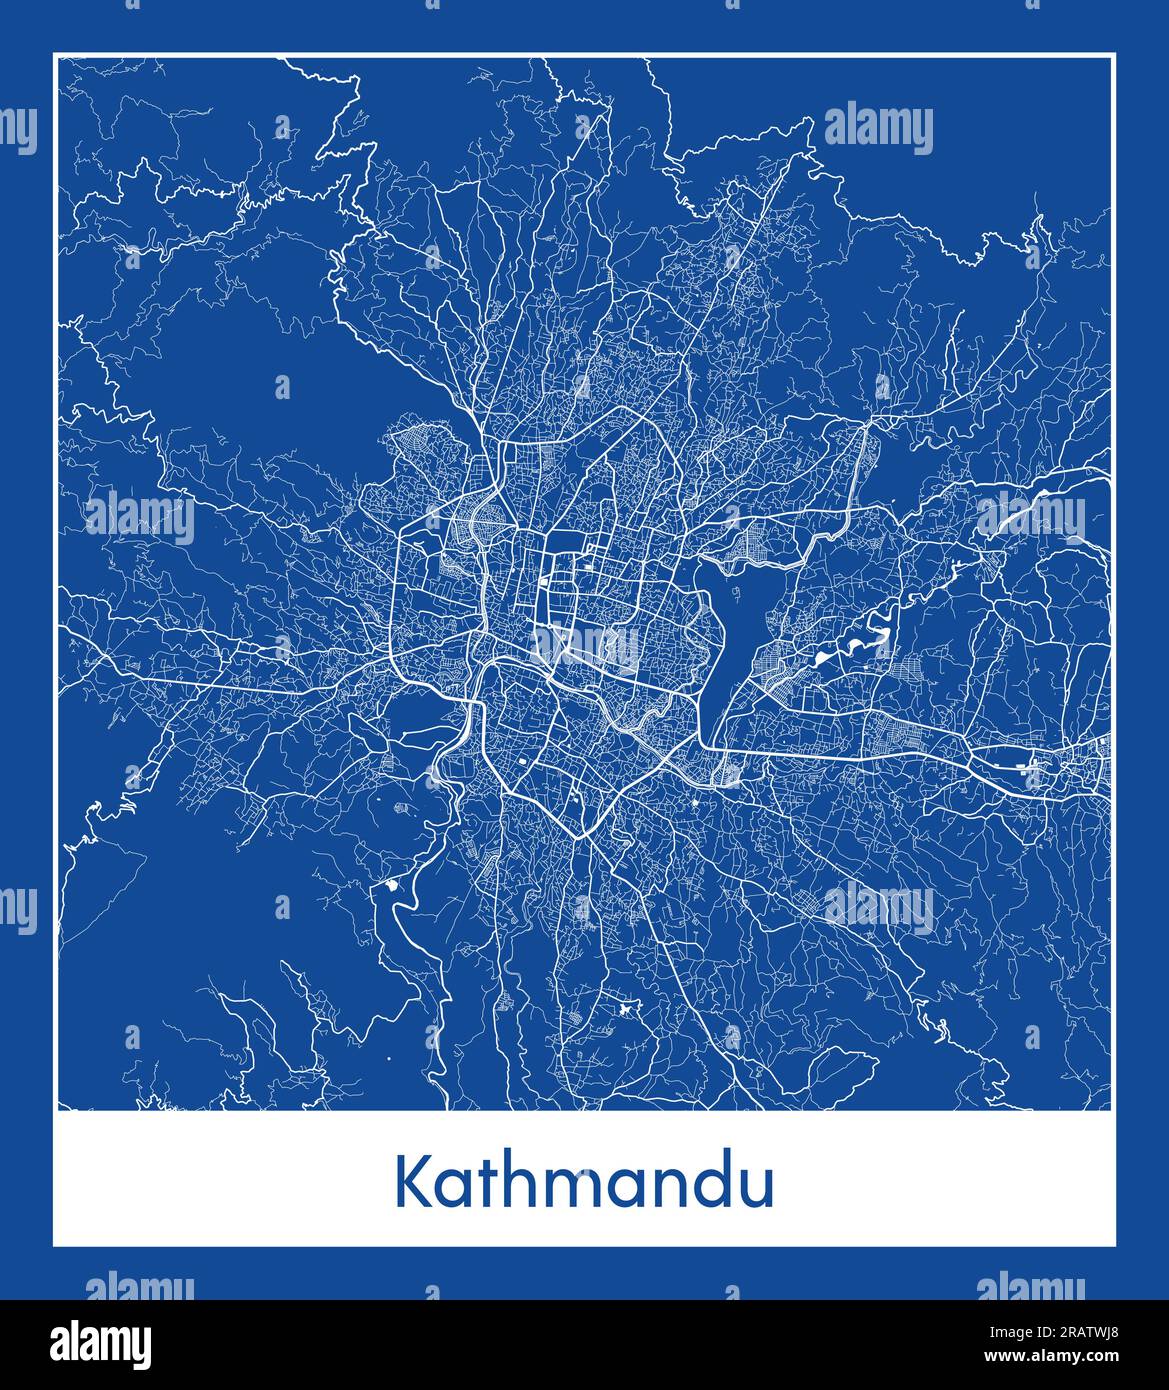 Kathmandu Nepal Asia City map blue print vector illustration Stock Vector